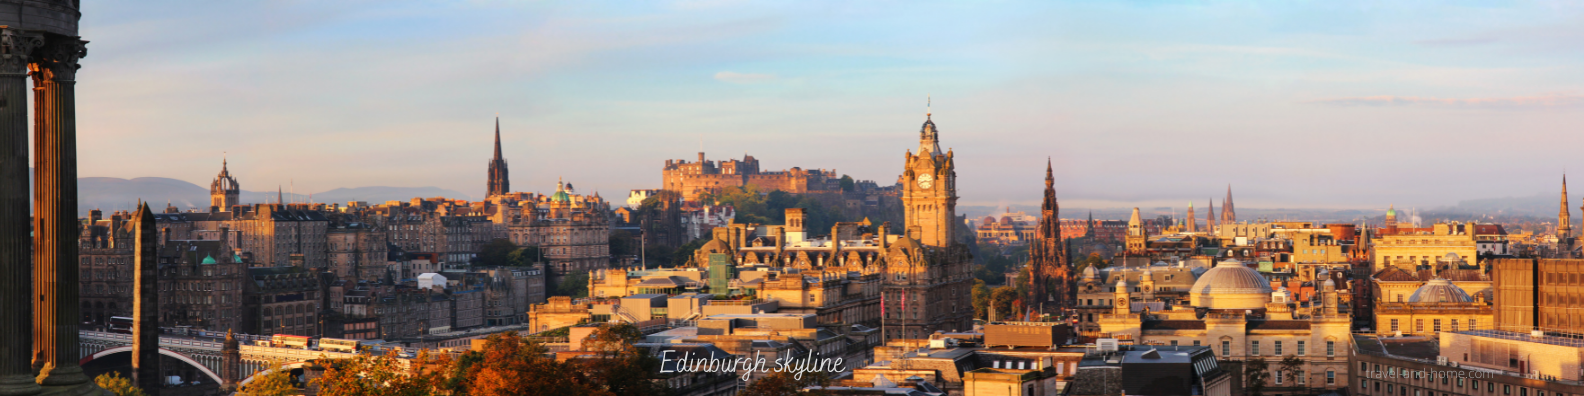 Edinburgh UK United Kingdom skyline cityscape panoramic view photo